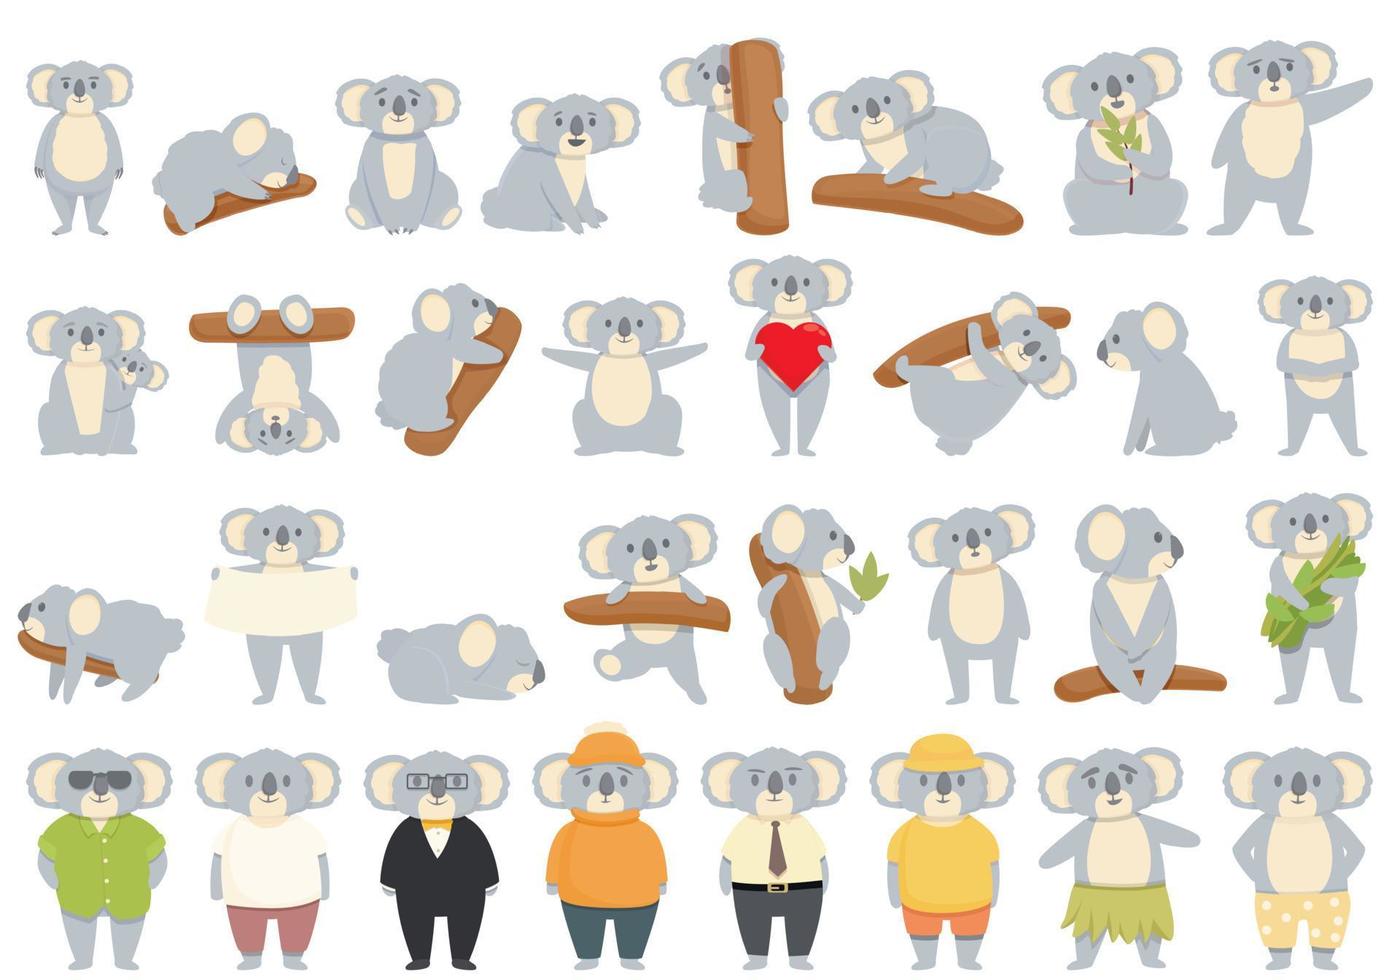 koala ikoner som tecknad vektor. australisk björn vektor